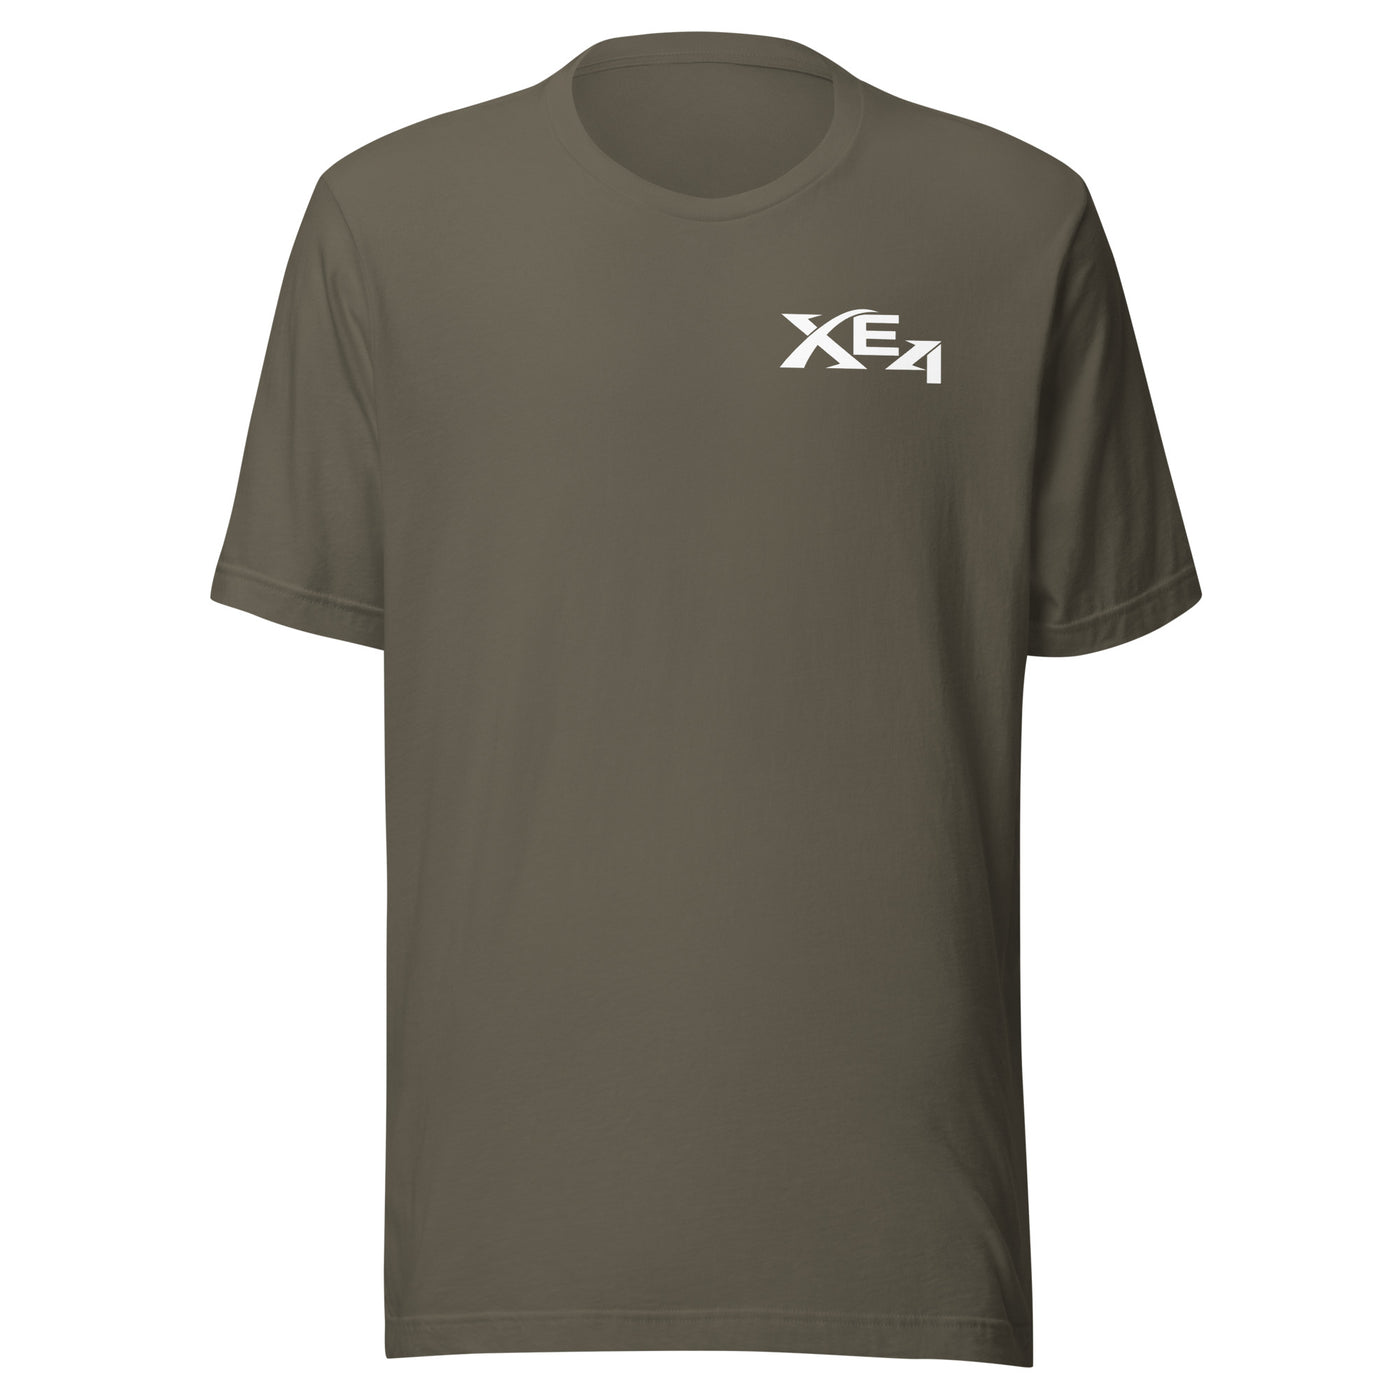 XE4 Shirt